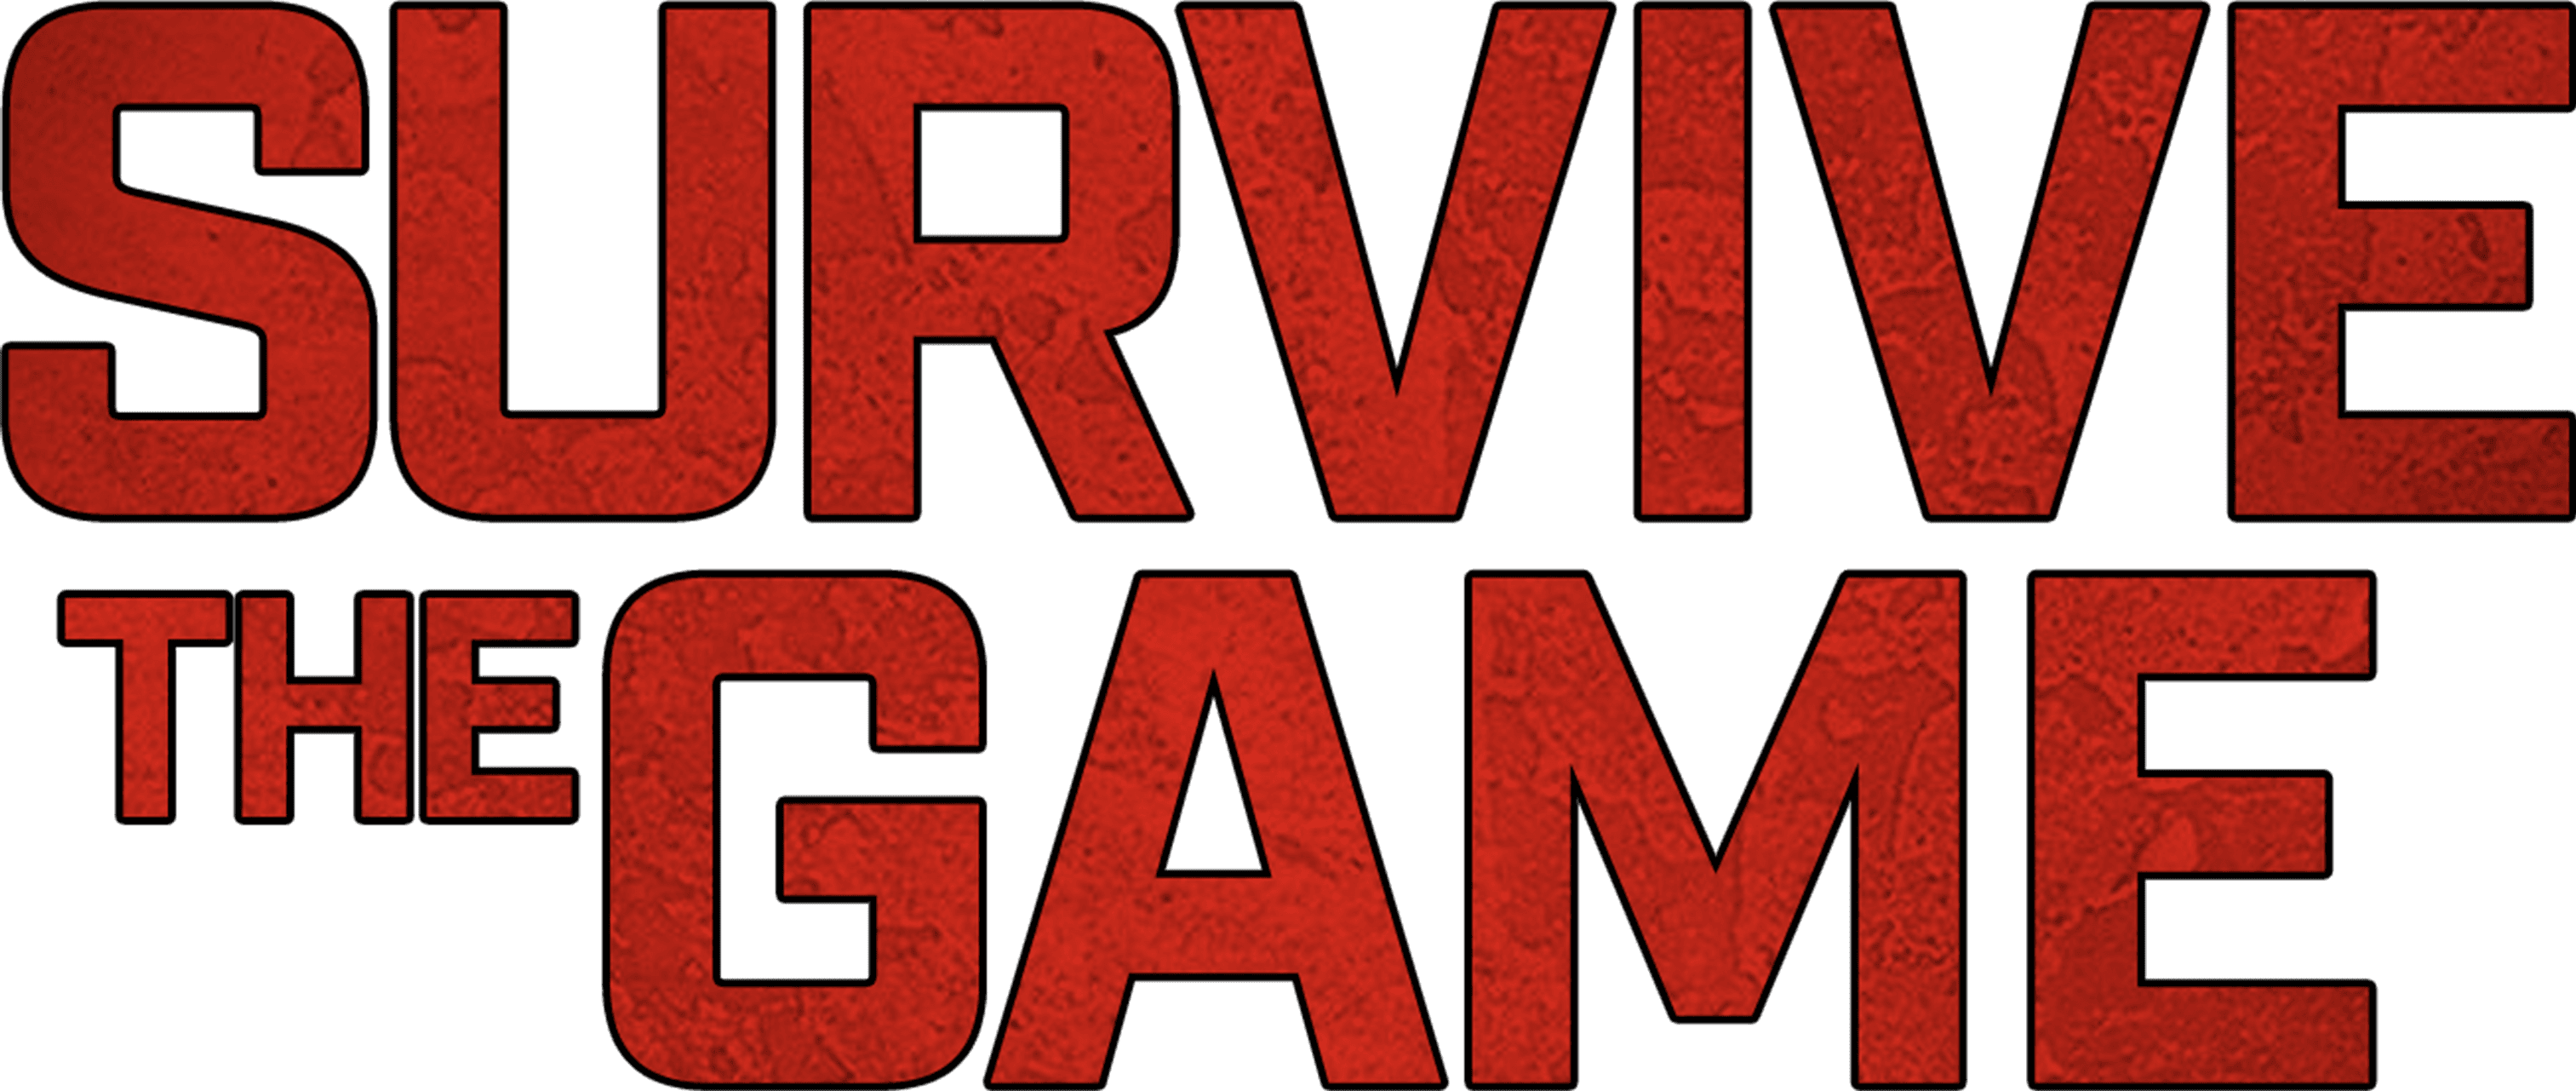 Survive the Game logo